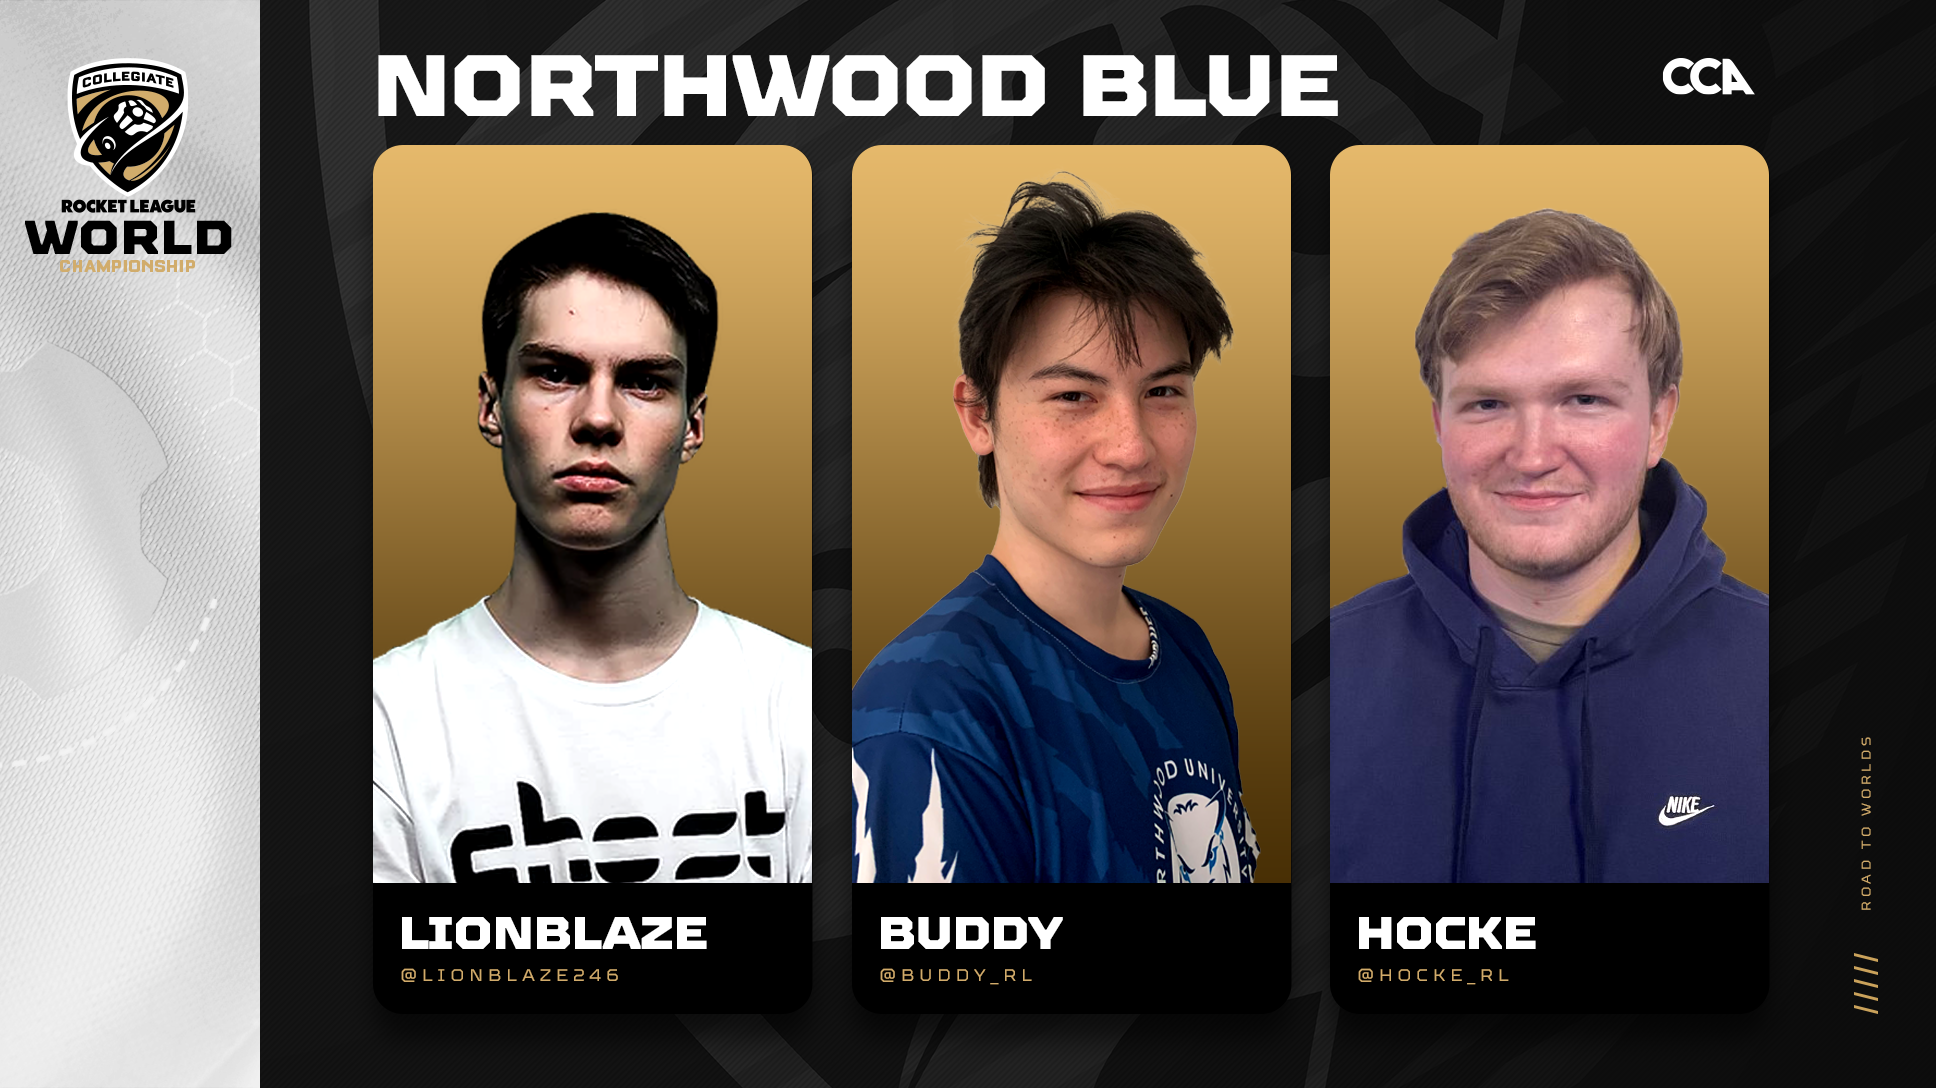 Northwood University Blue Road to Worlds header with images of LionBlaze, Buddy, and HockE